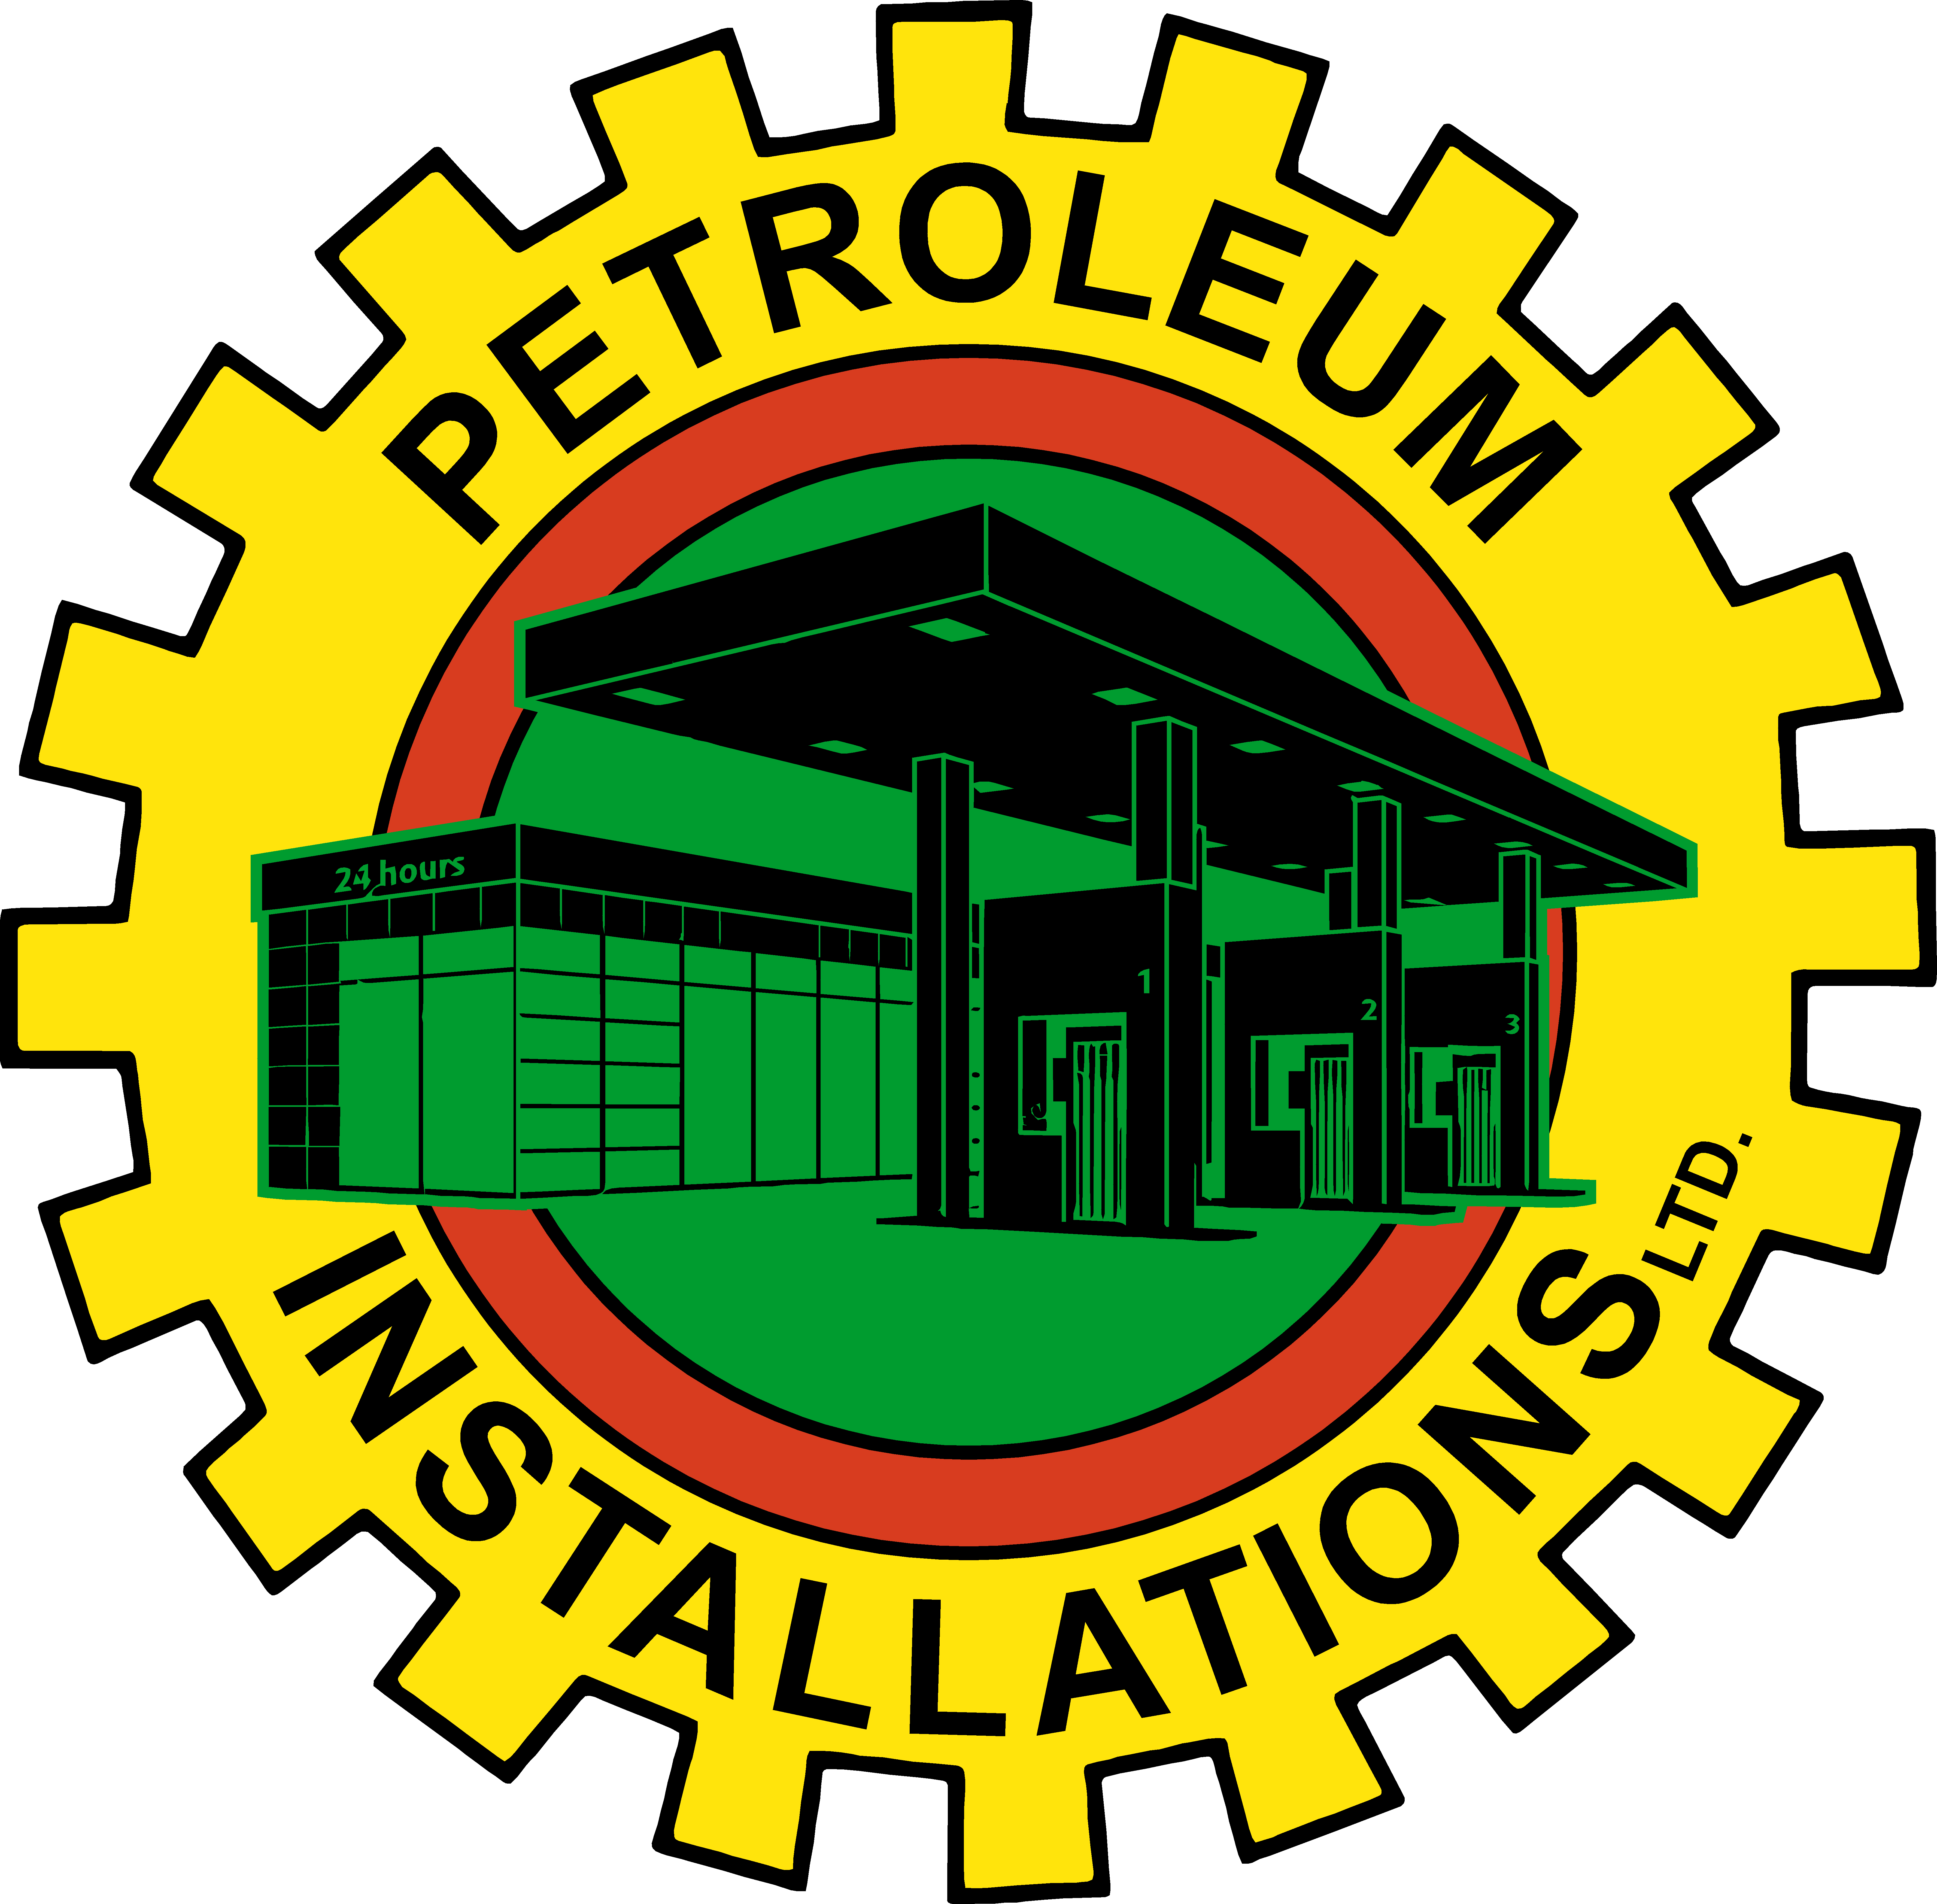 Petrolelum Installations Ltd